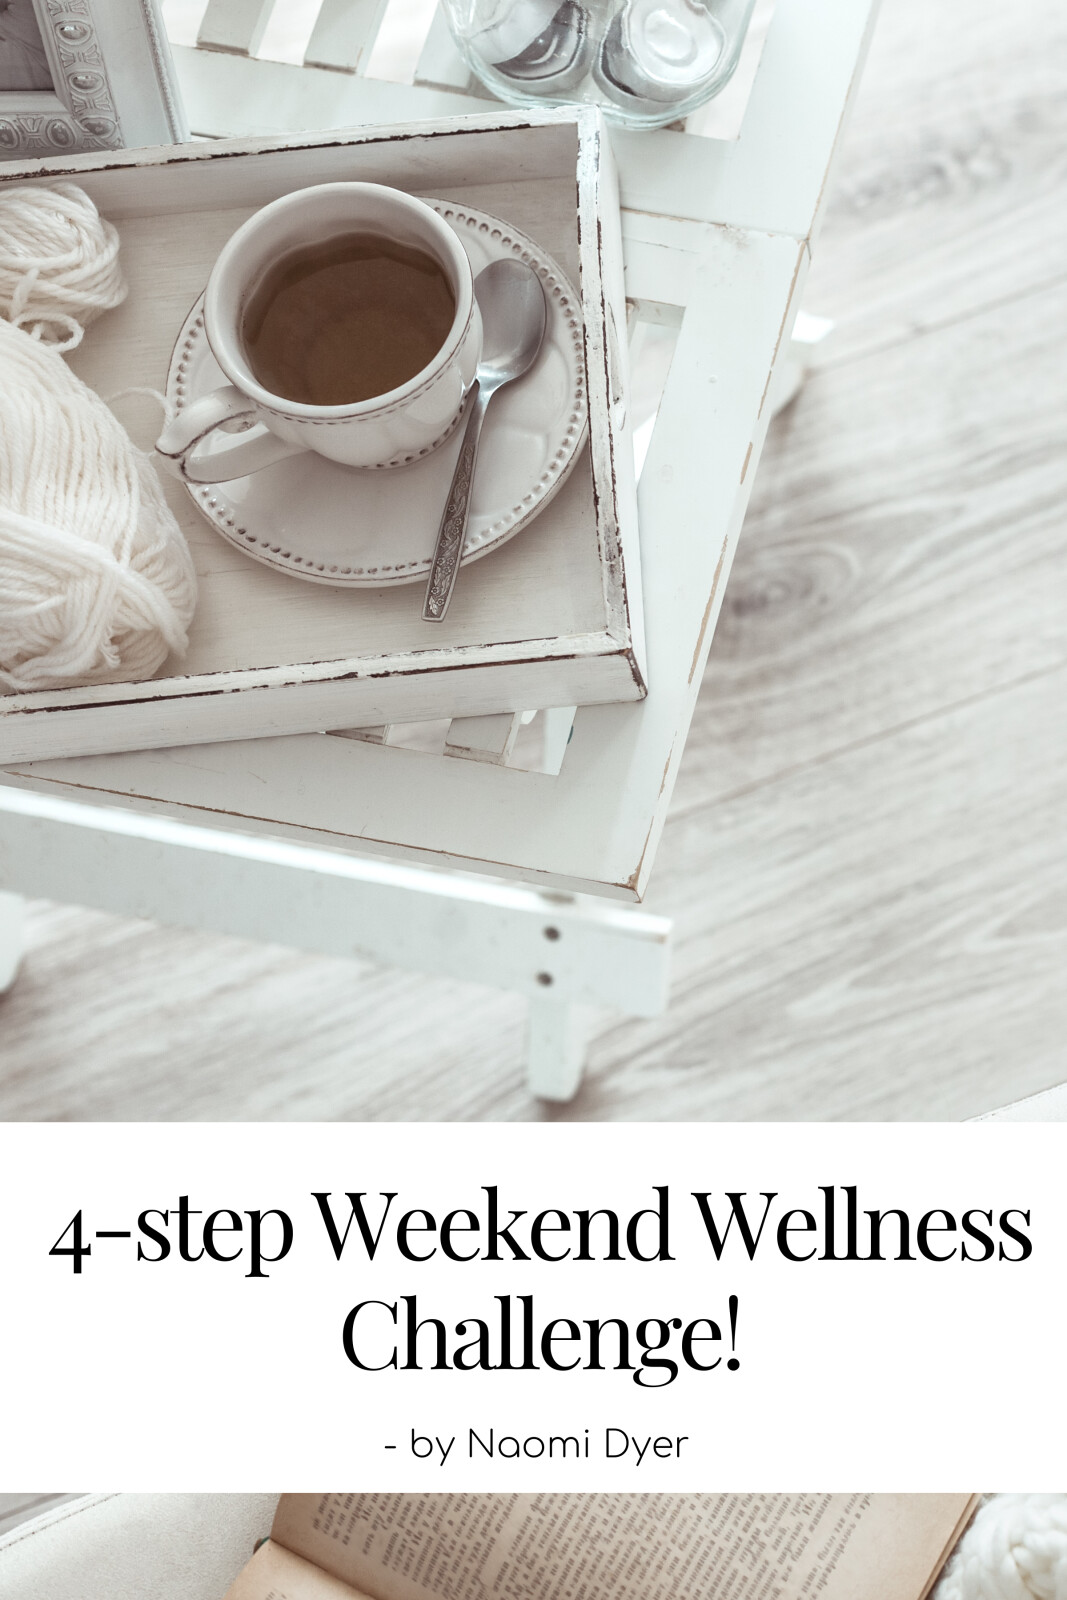 4-step Weekend Wellness Challenge